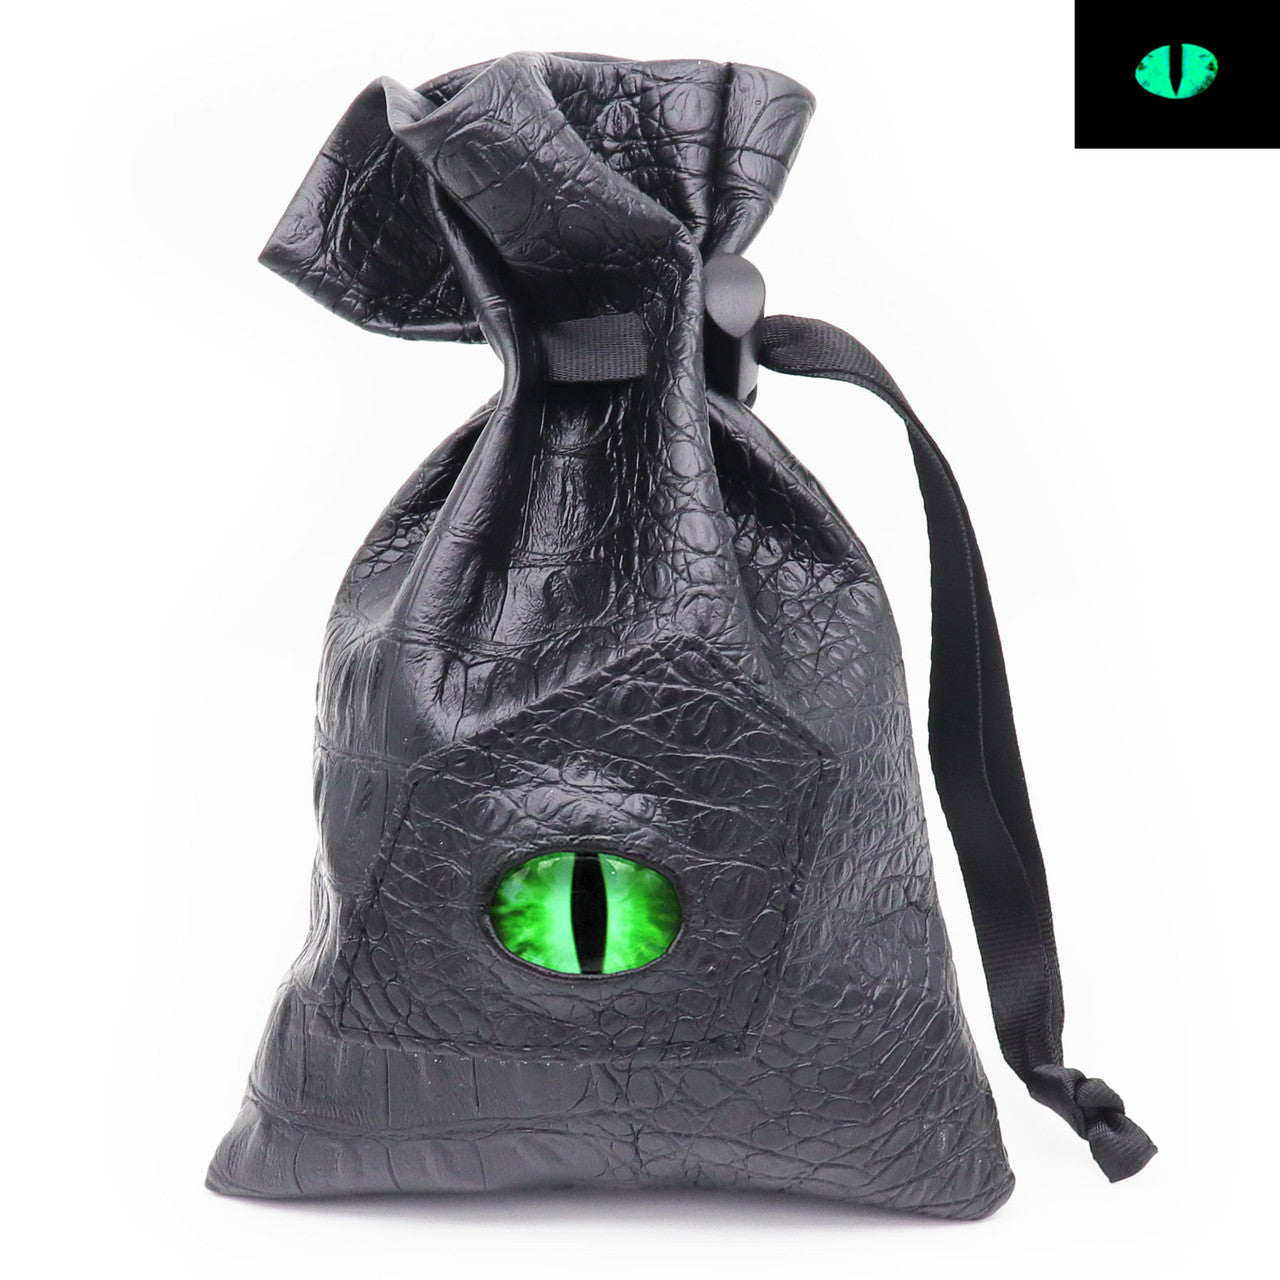 drgaon eye dice bag, leather dice bag, eye dice bag, drawstring dice bag, green eye dice bag, green eye